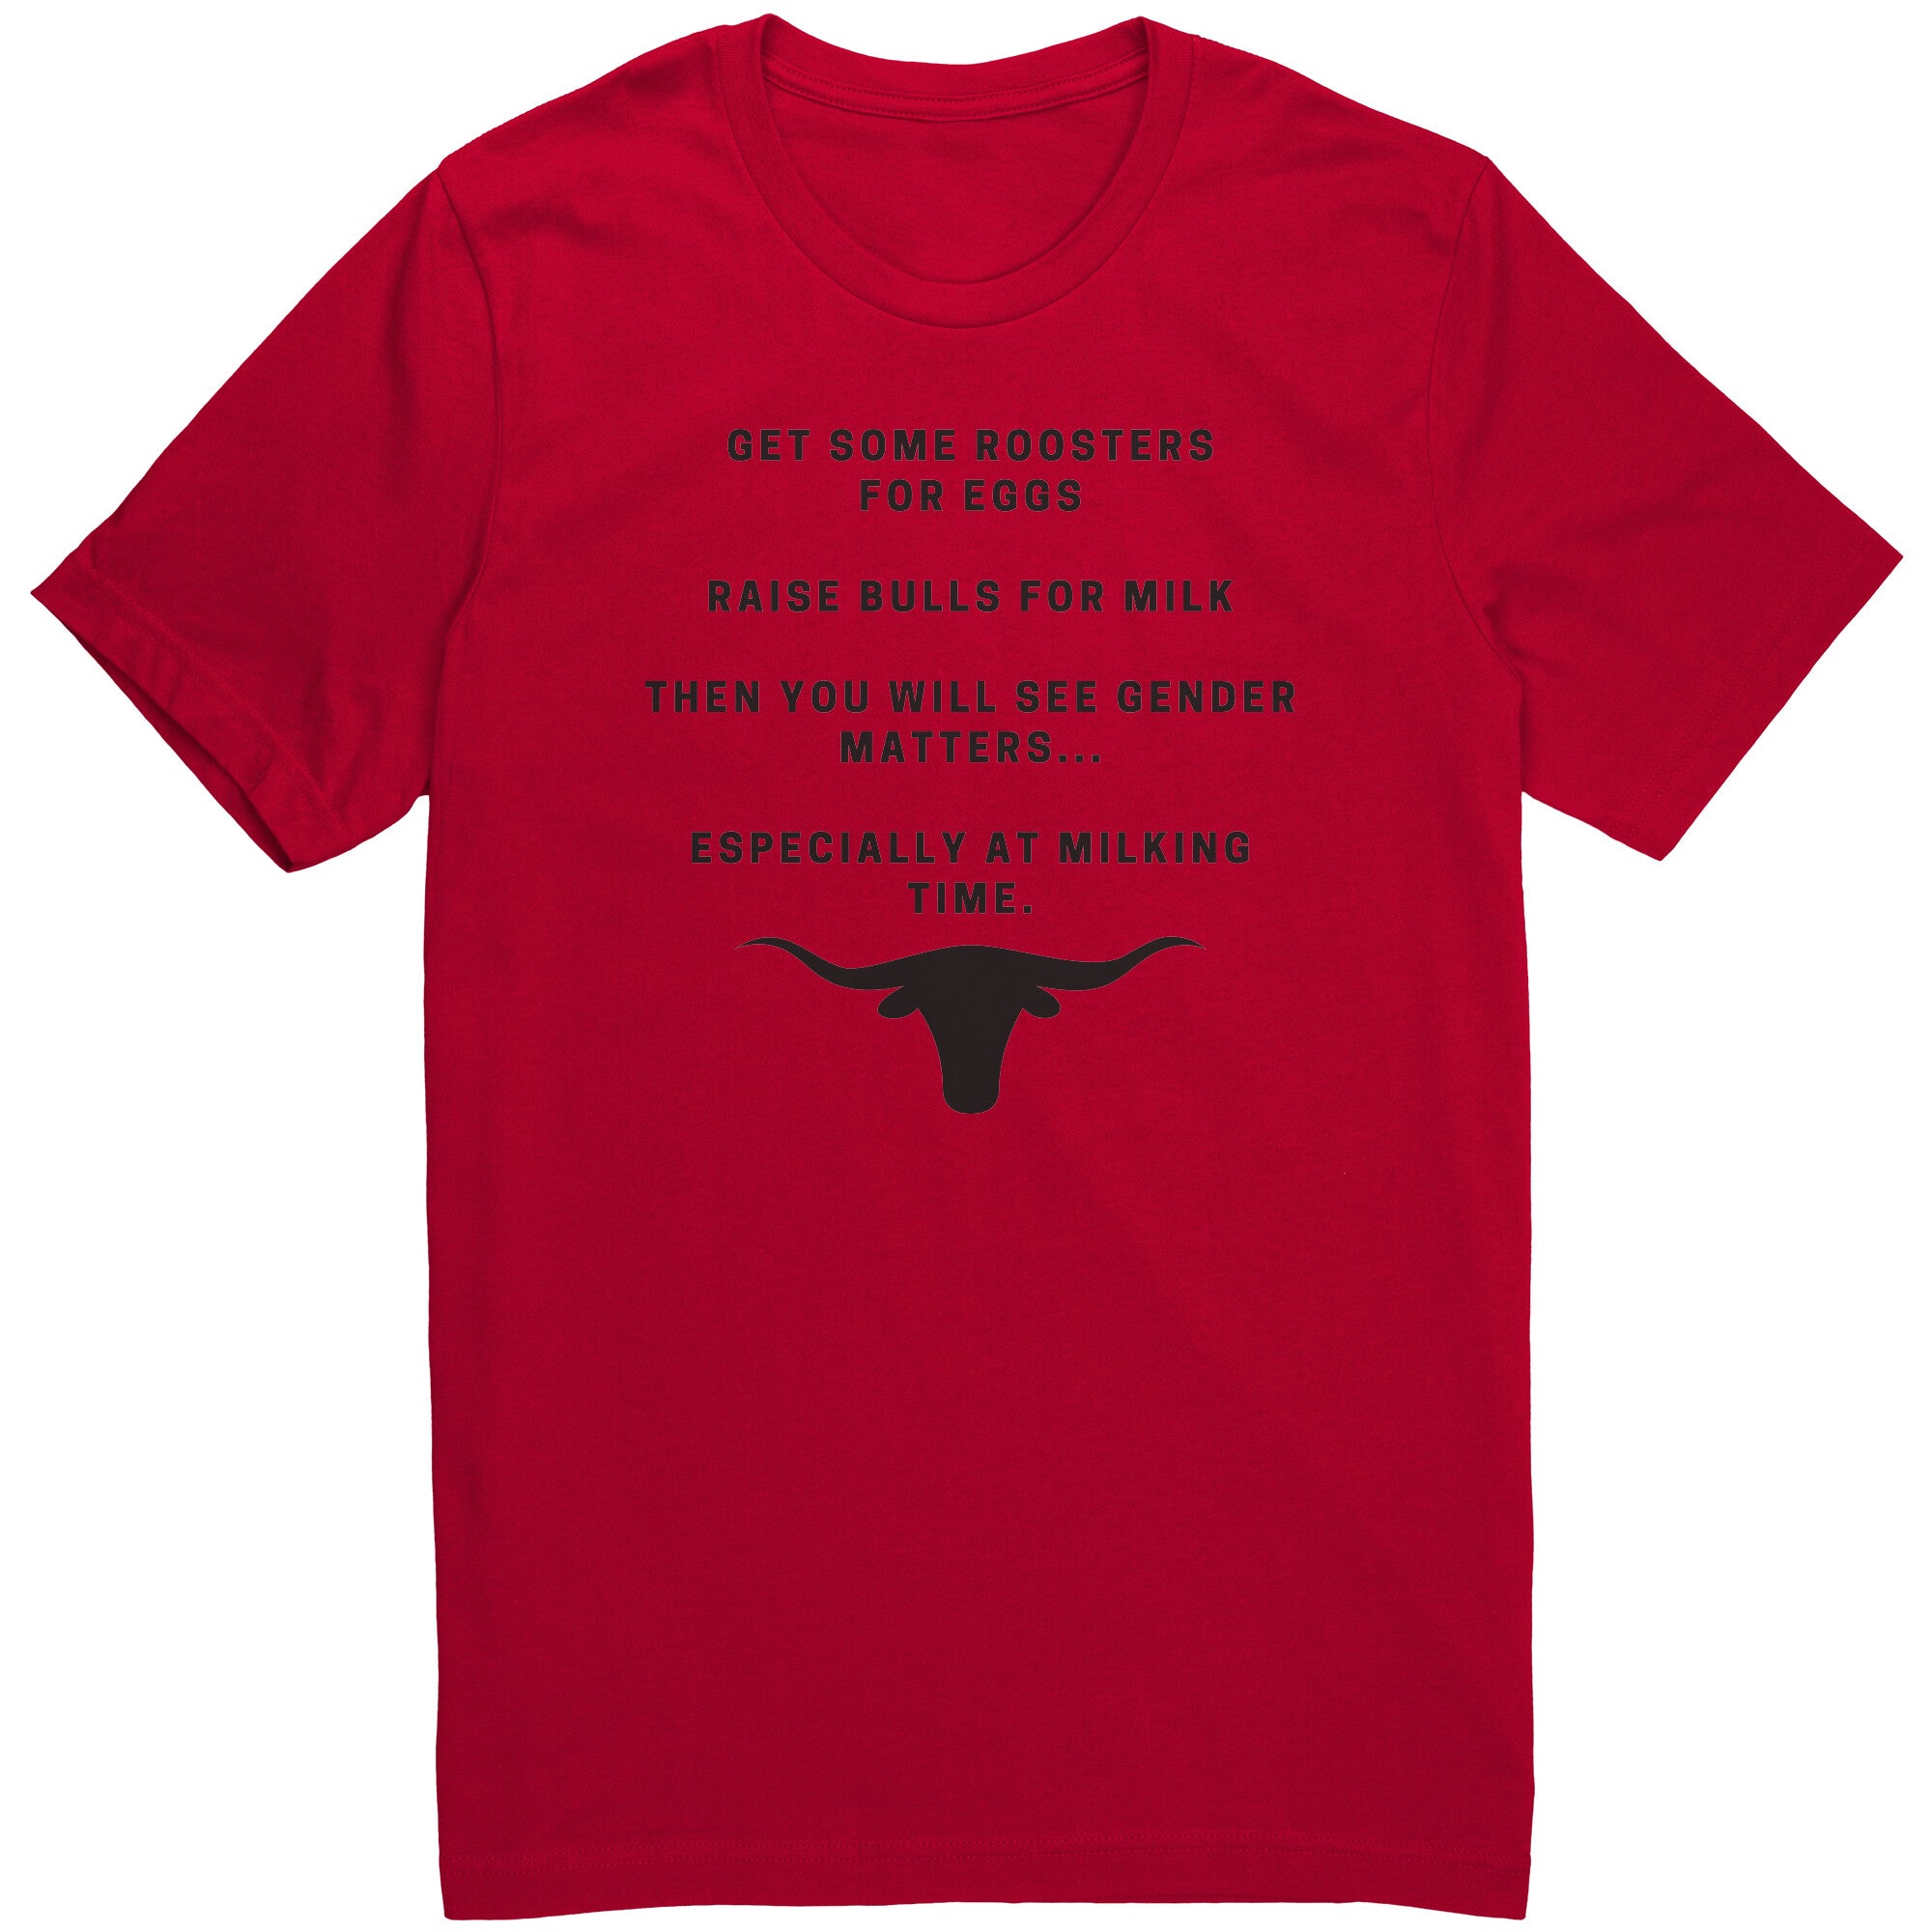 Funny Mens Shirt, Sarcastic Shirt For Men, Novelty Shirts, Offensive Shirt Milk A Bull Gender Matters Unisex Tee red